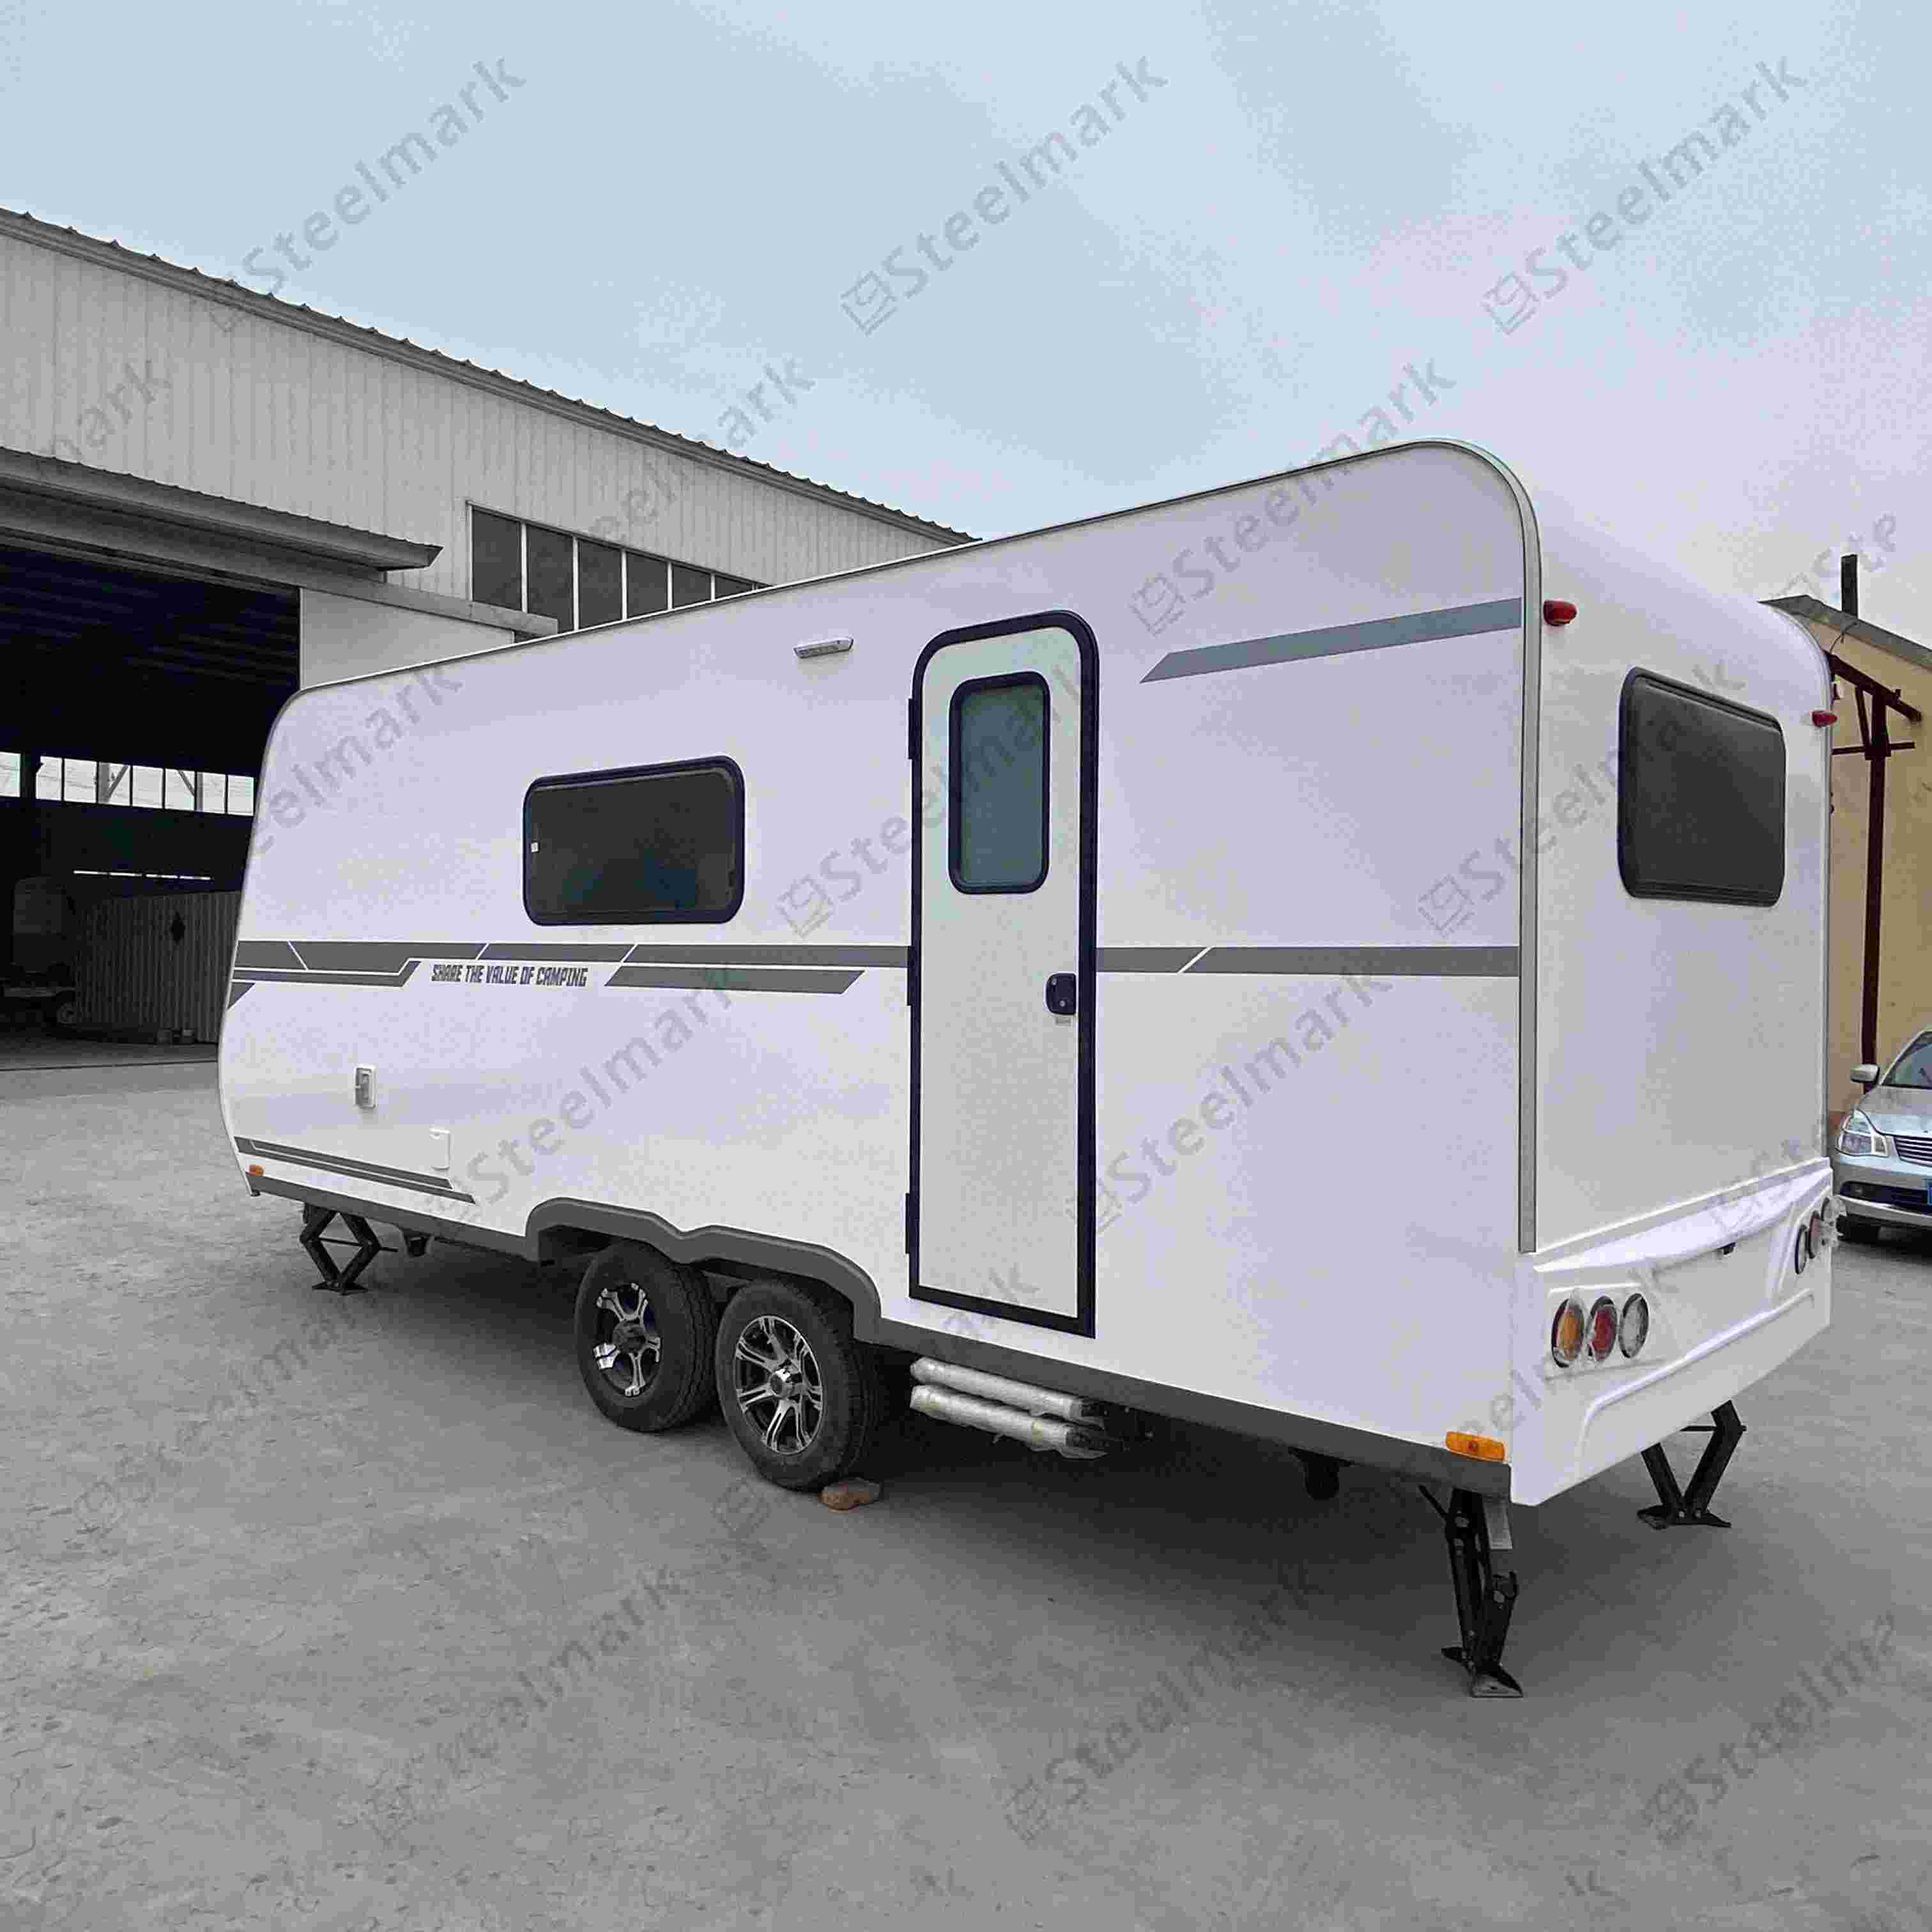 SFC-005 wholesale camping caravan camper for sale